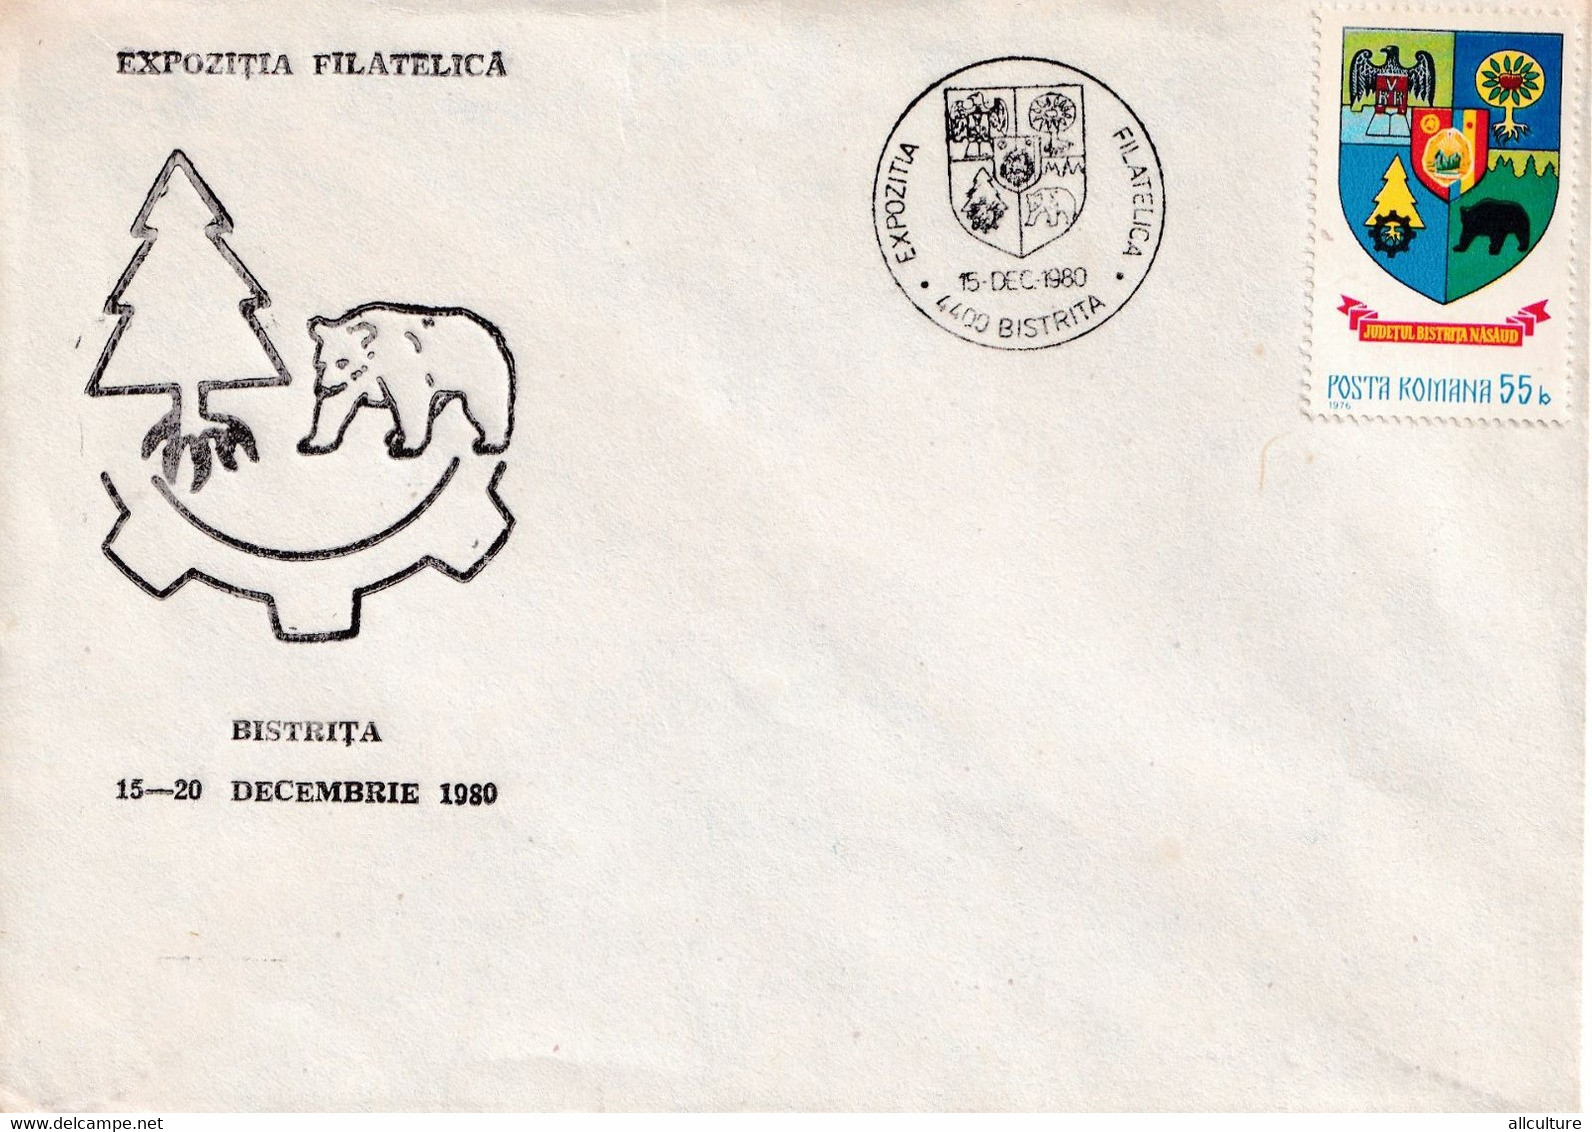 A2804 -  Expozitia Filatelica15-20 Decembrie 1980  Bistrita, Bistrita Nasaud 1980 Romania - Briefe U. Dokumente